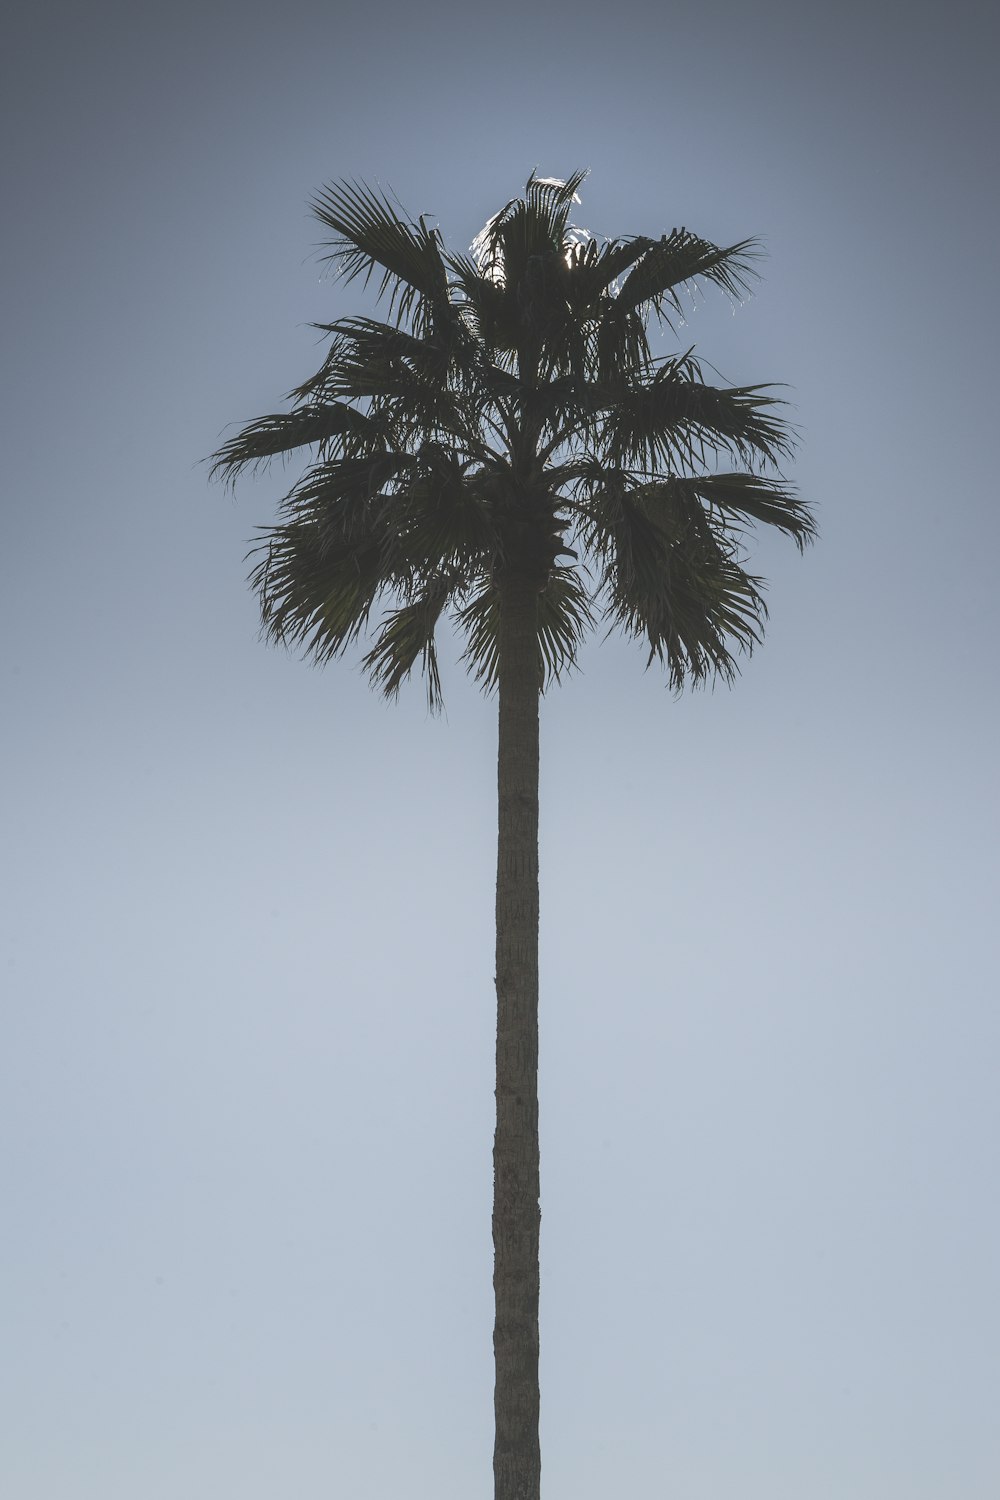 a tall palm tree sitting under a blue sky